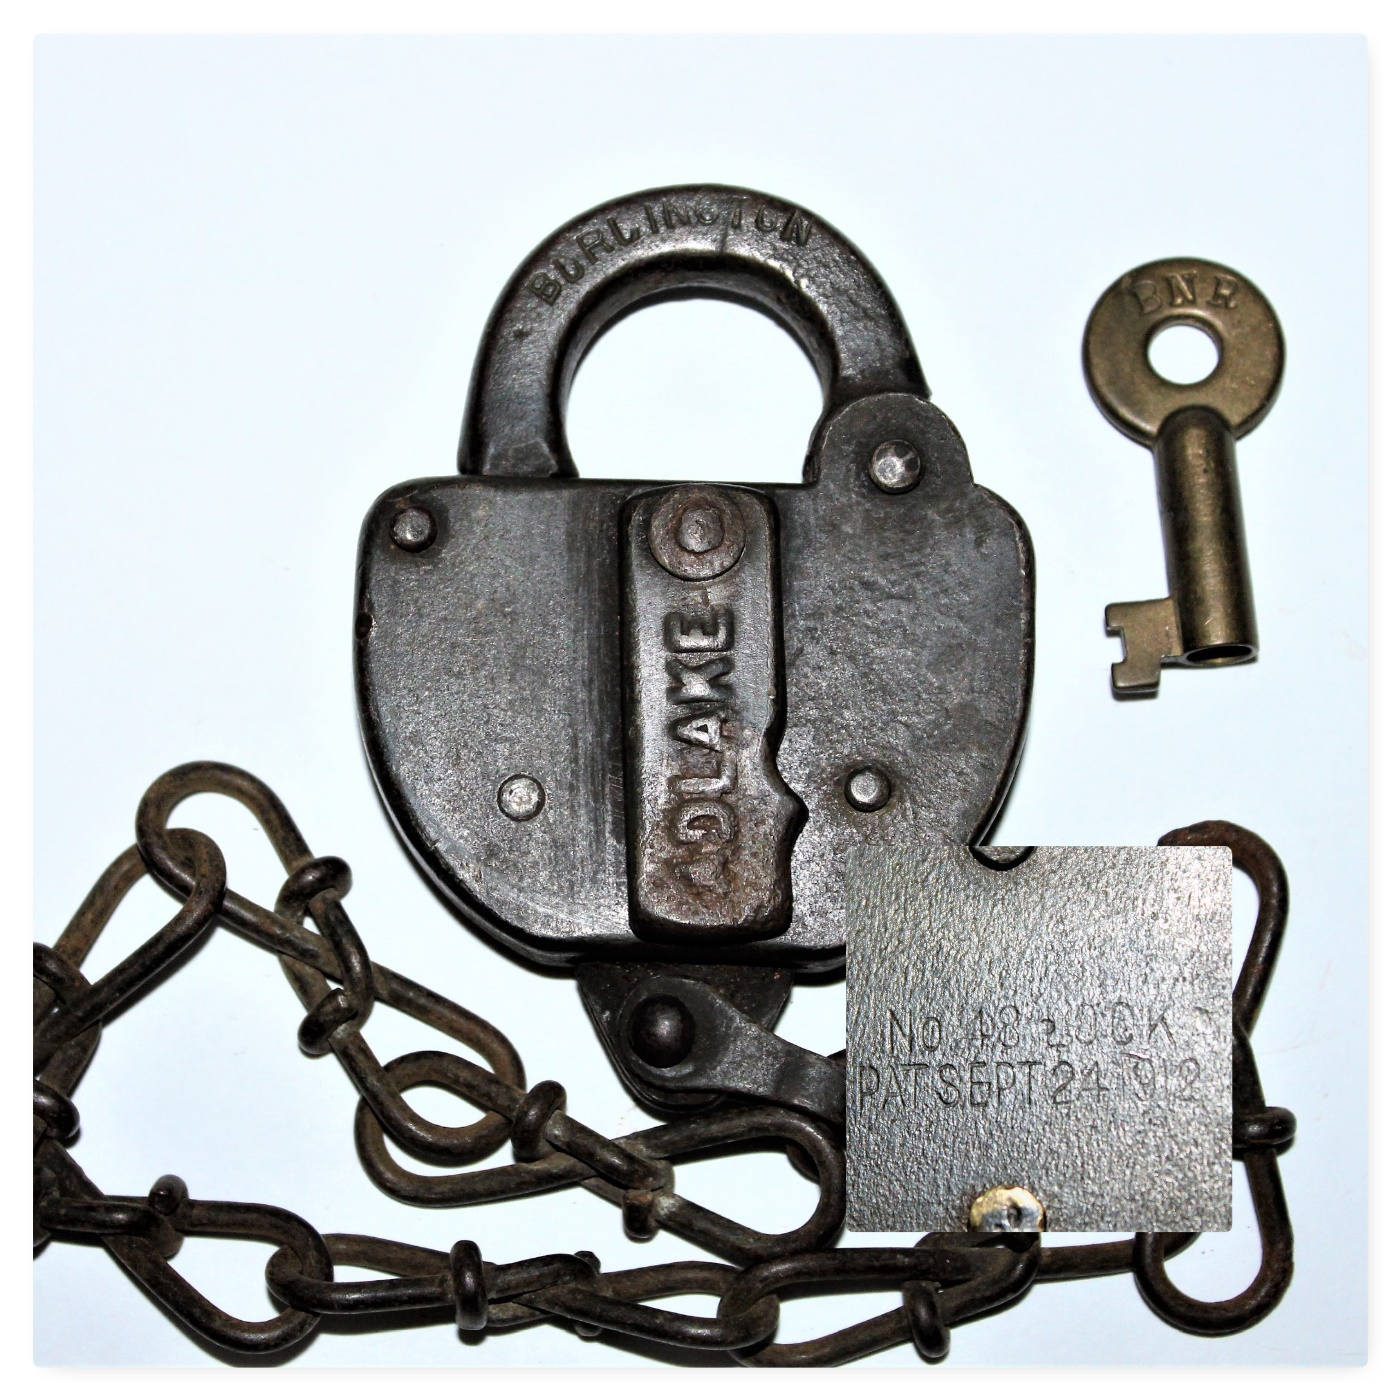 Railroad Switch Keys and Locks